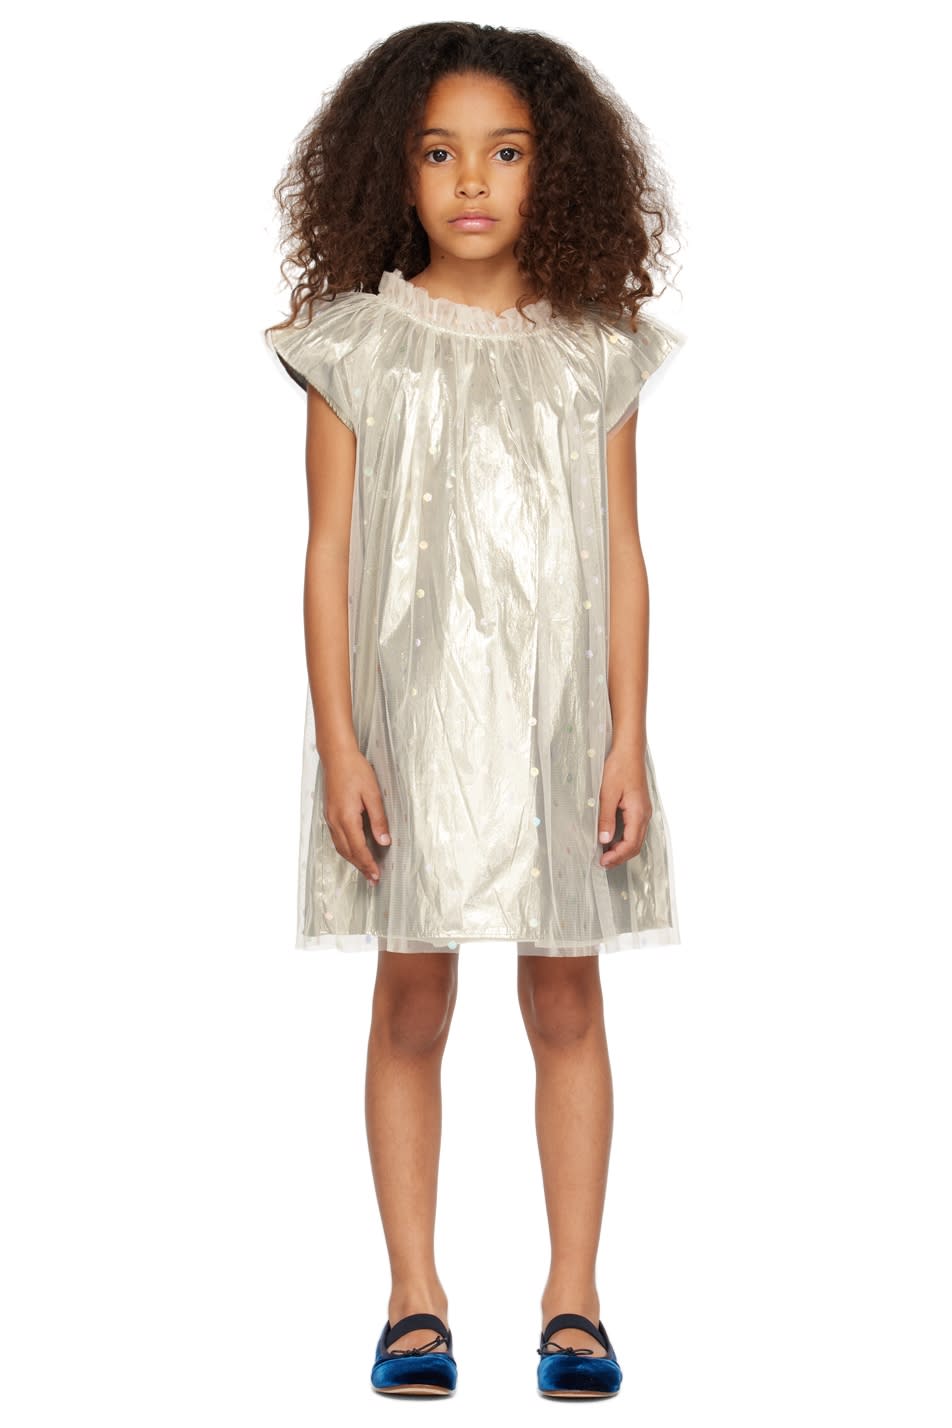 Bonpoint Kids' Charlotte Sequined Tulle Dress In Ecru